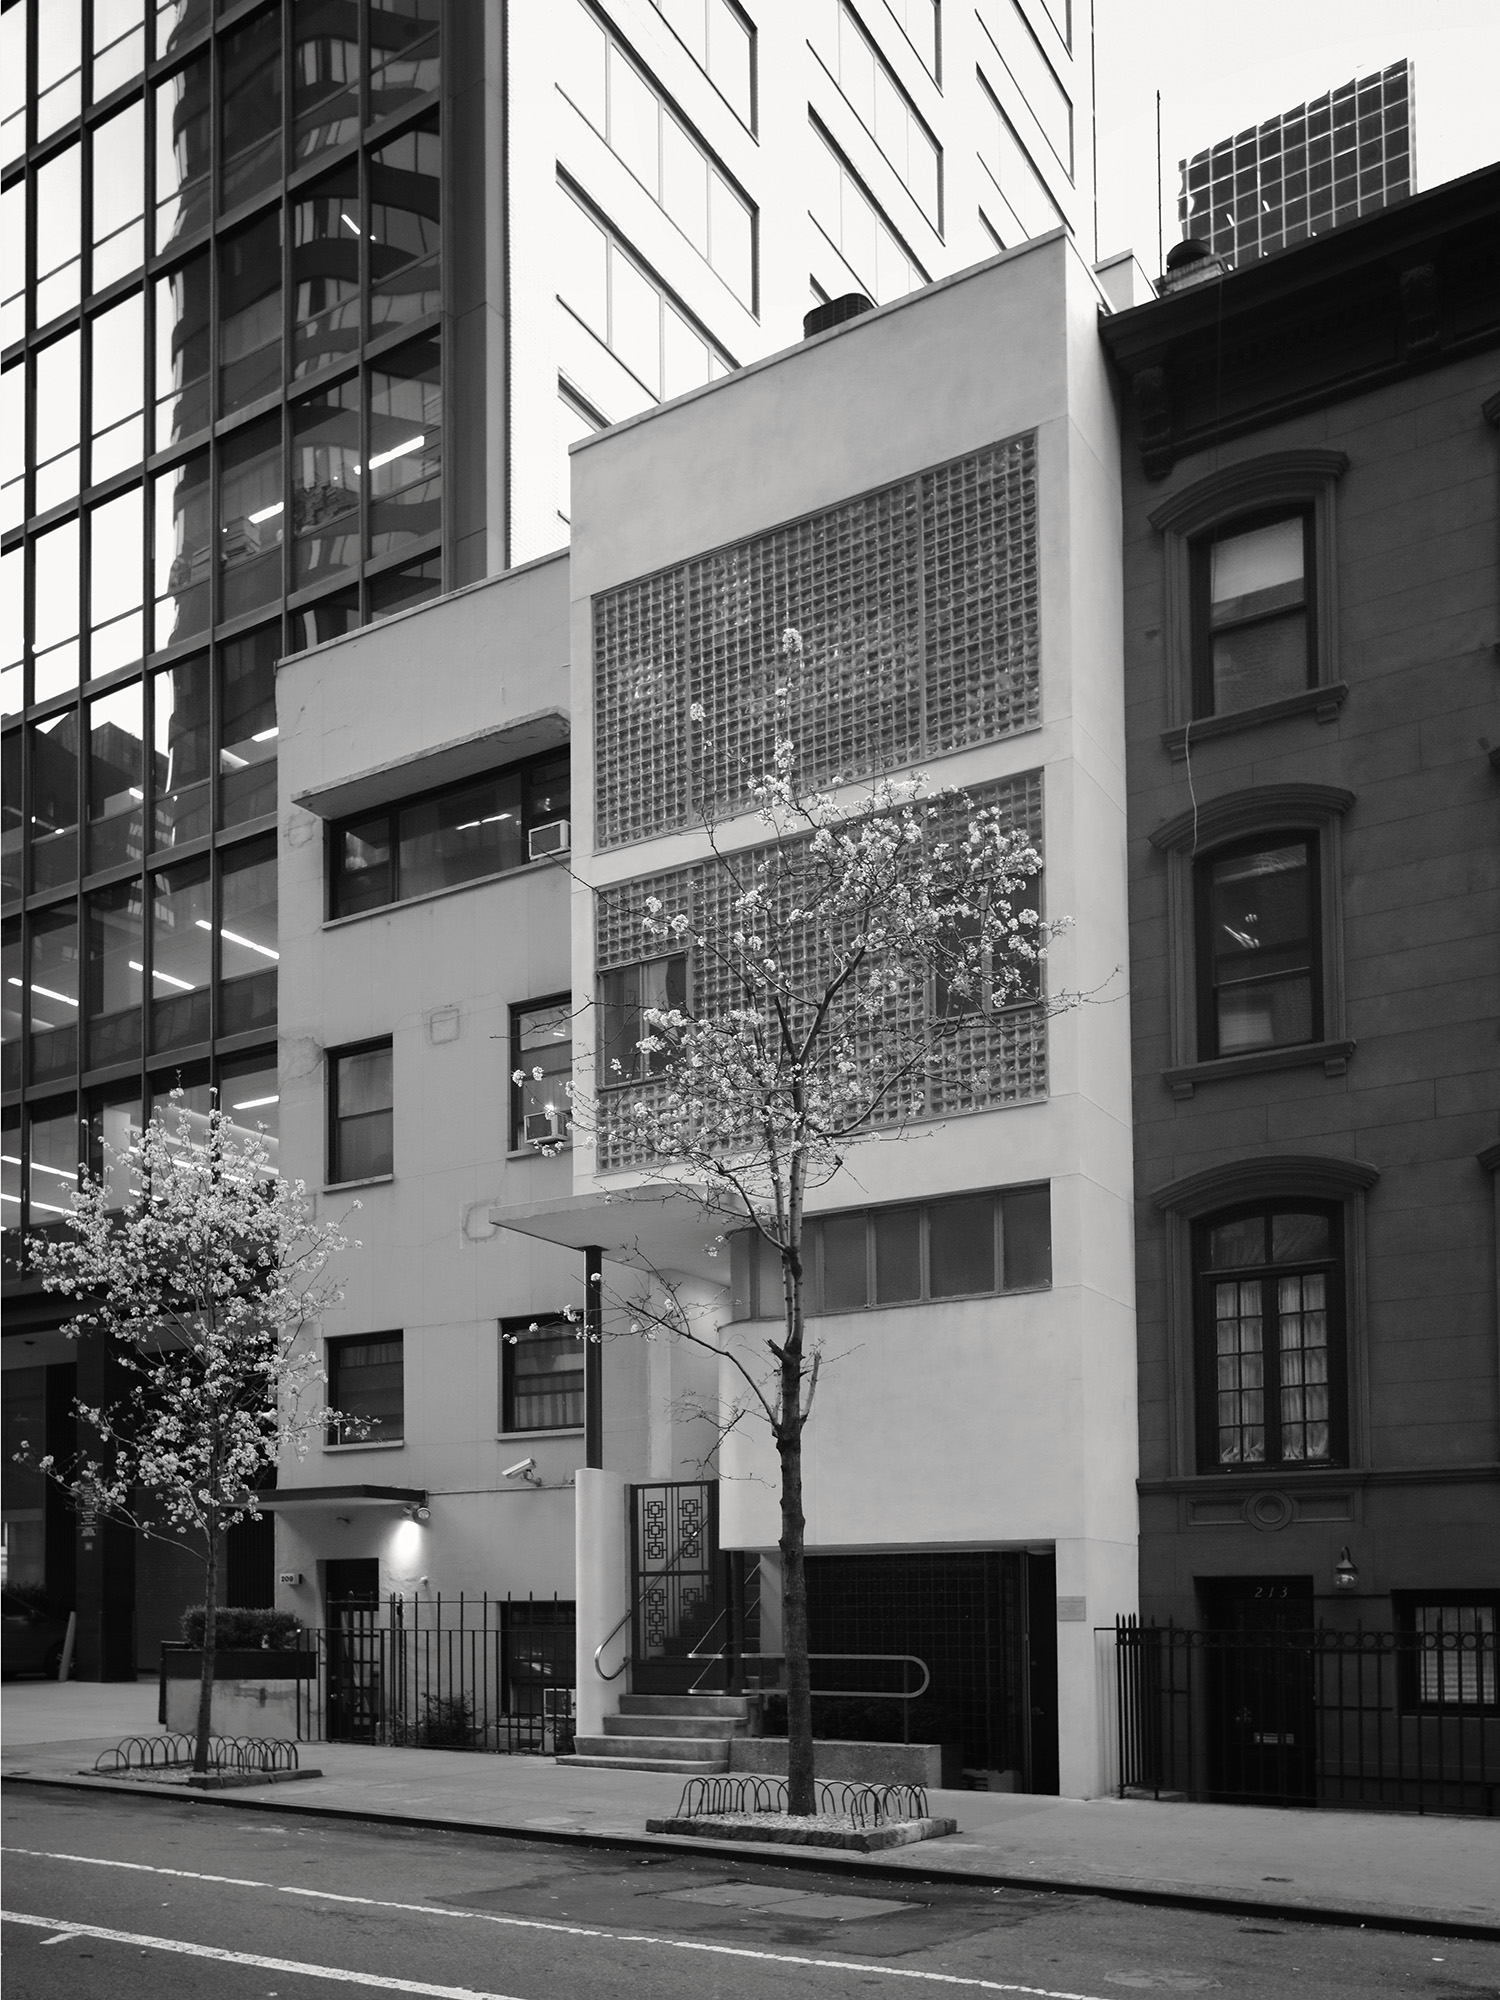 Lescaze House and Studio. 
William Lescaze
New York, 1933